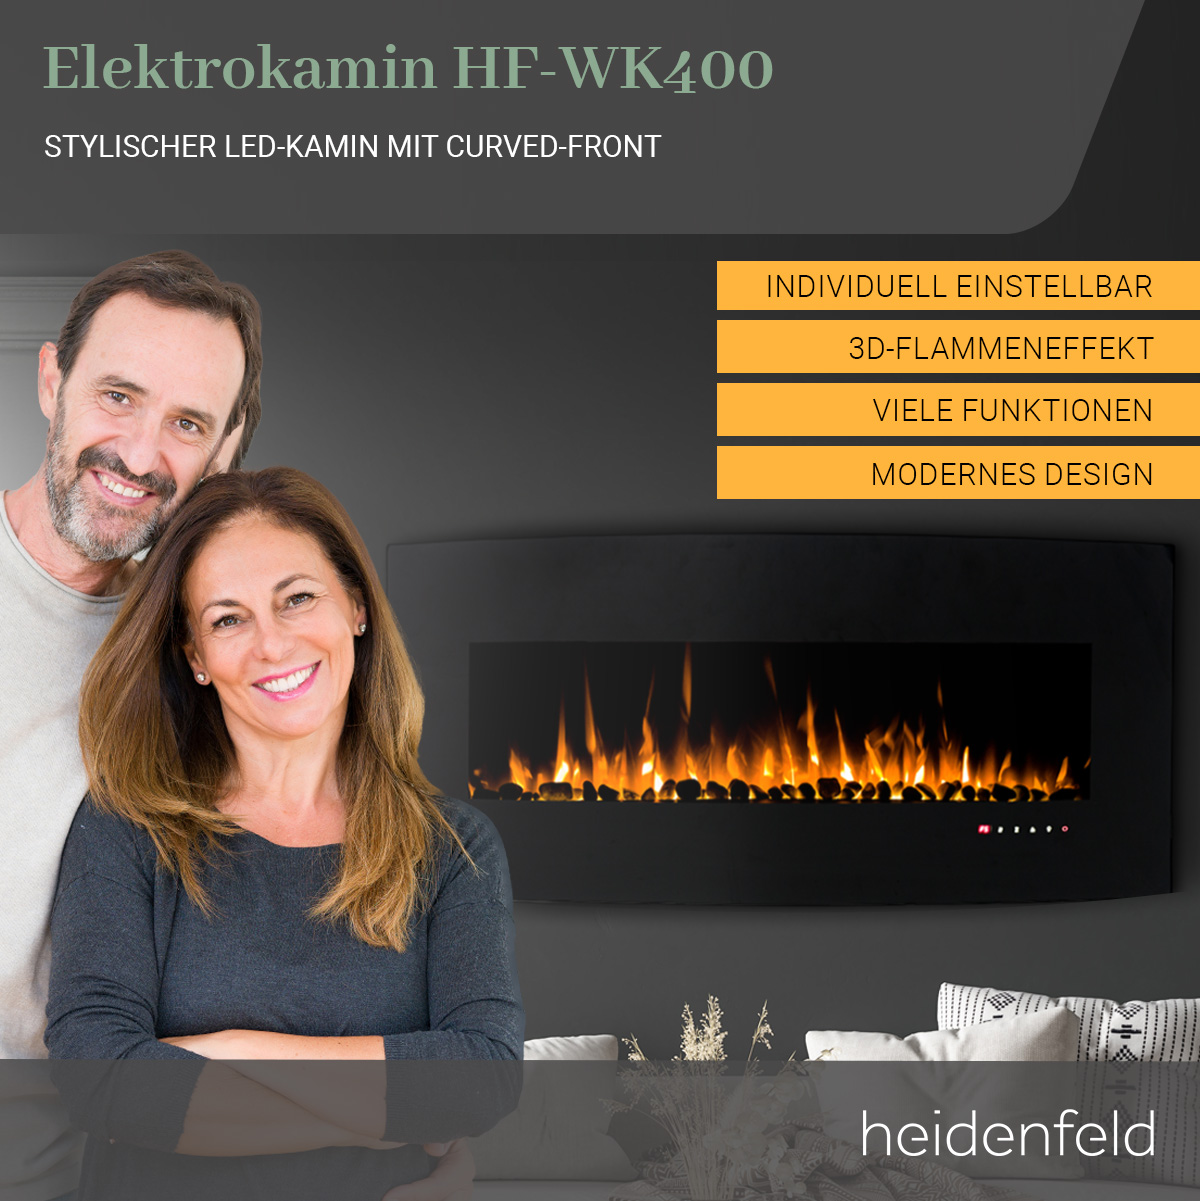 Watt) (1500 HF-WK400 HEIDENFELD Elektrokamin